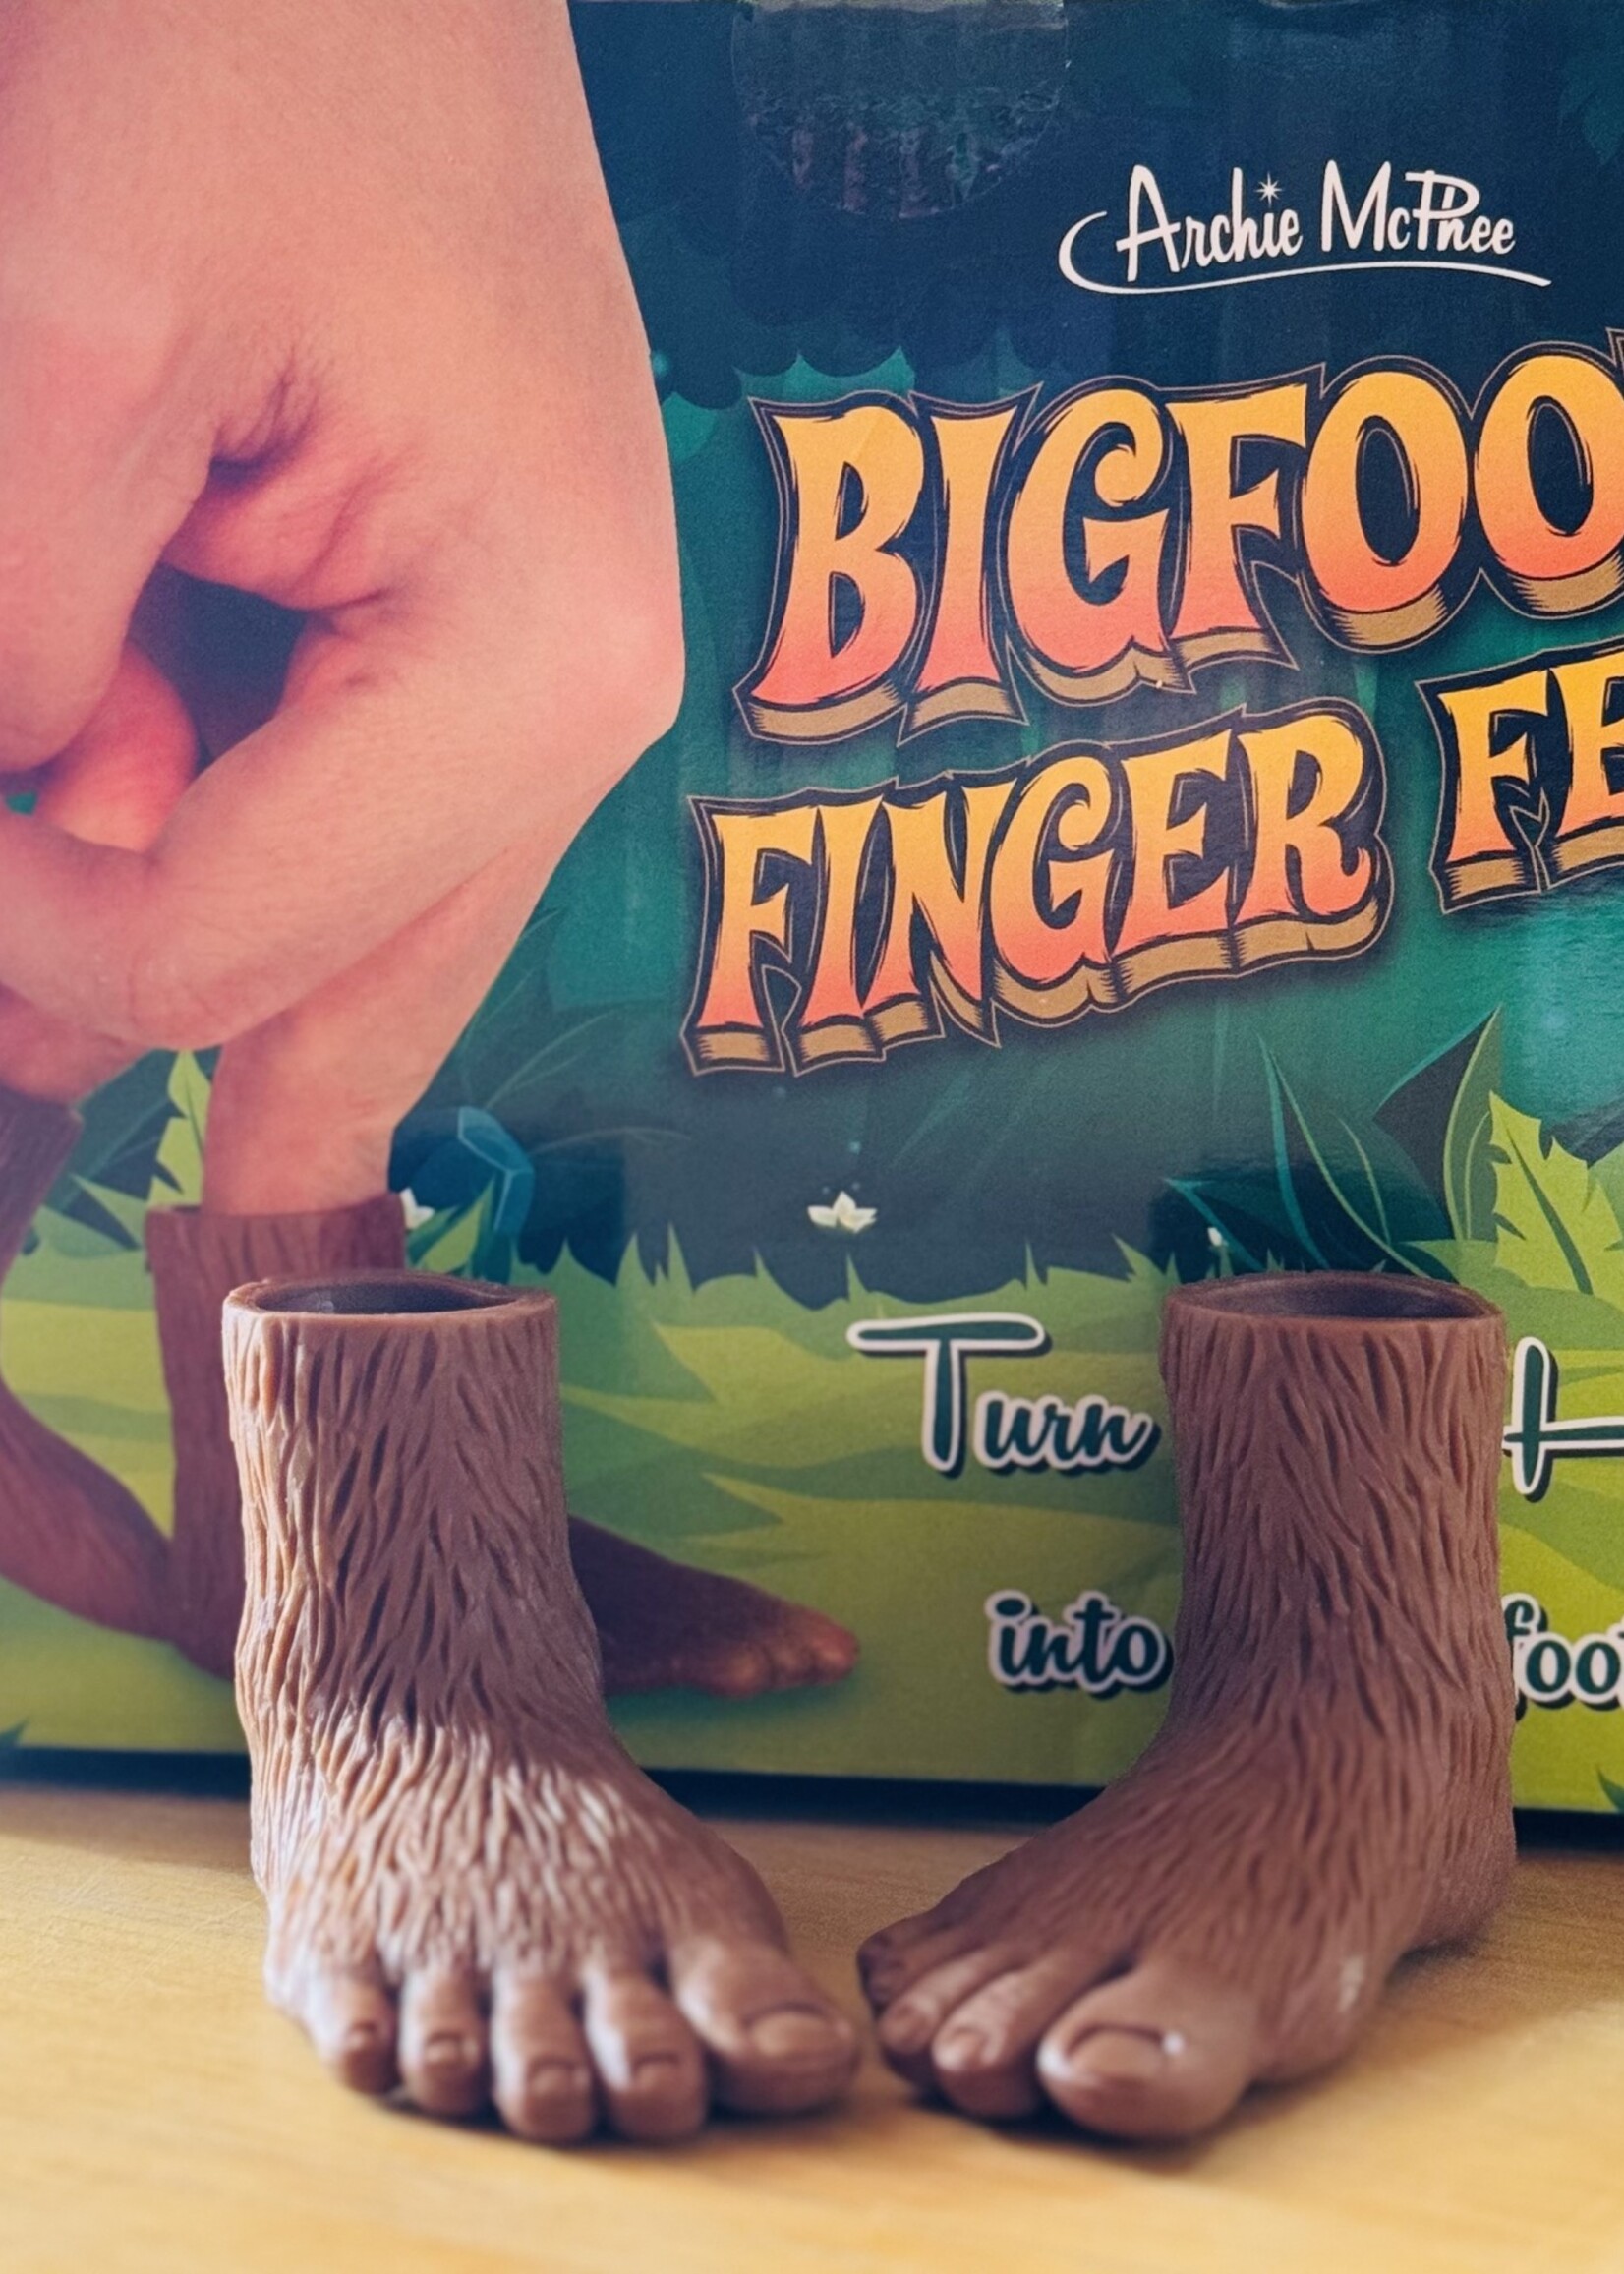 Archie McPhee Bigfoot Finger Feet